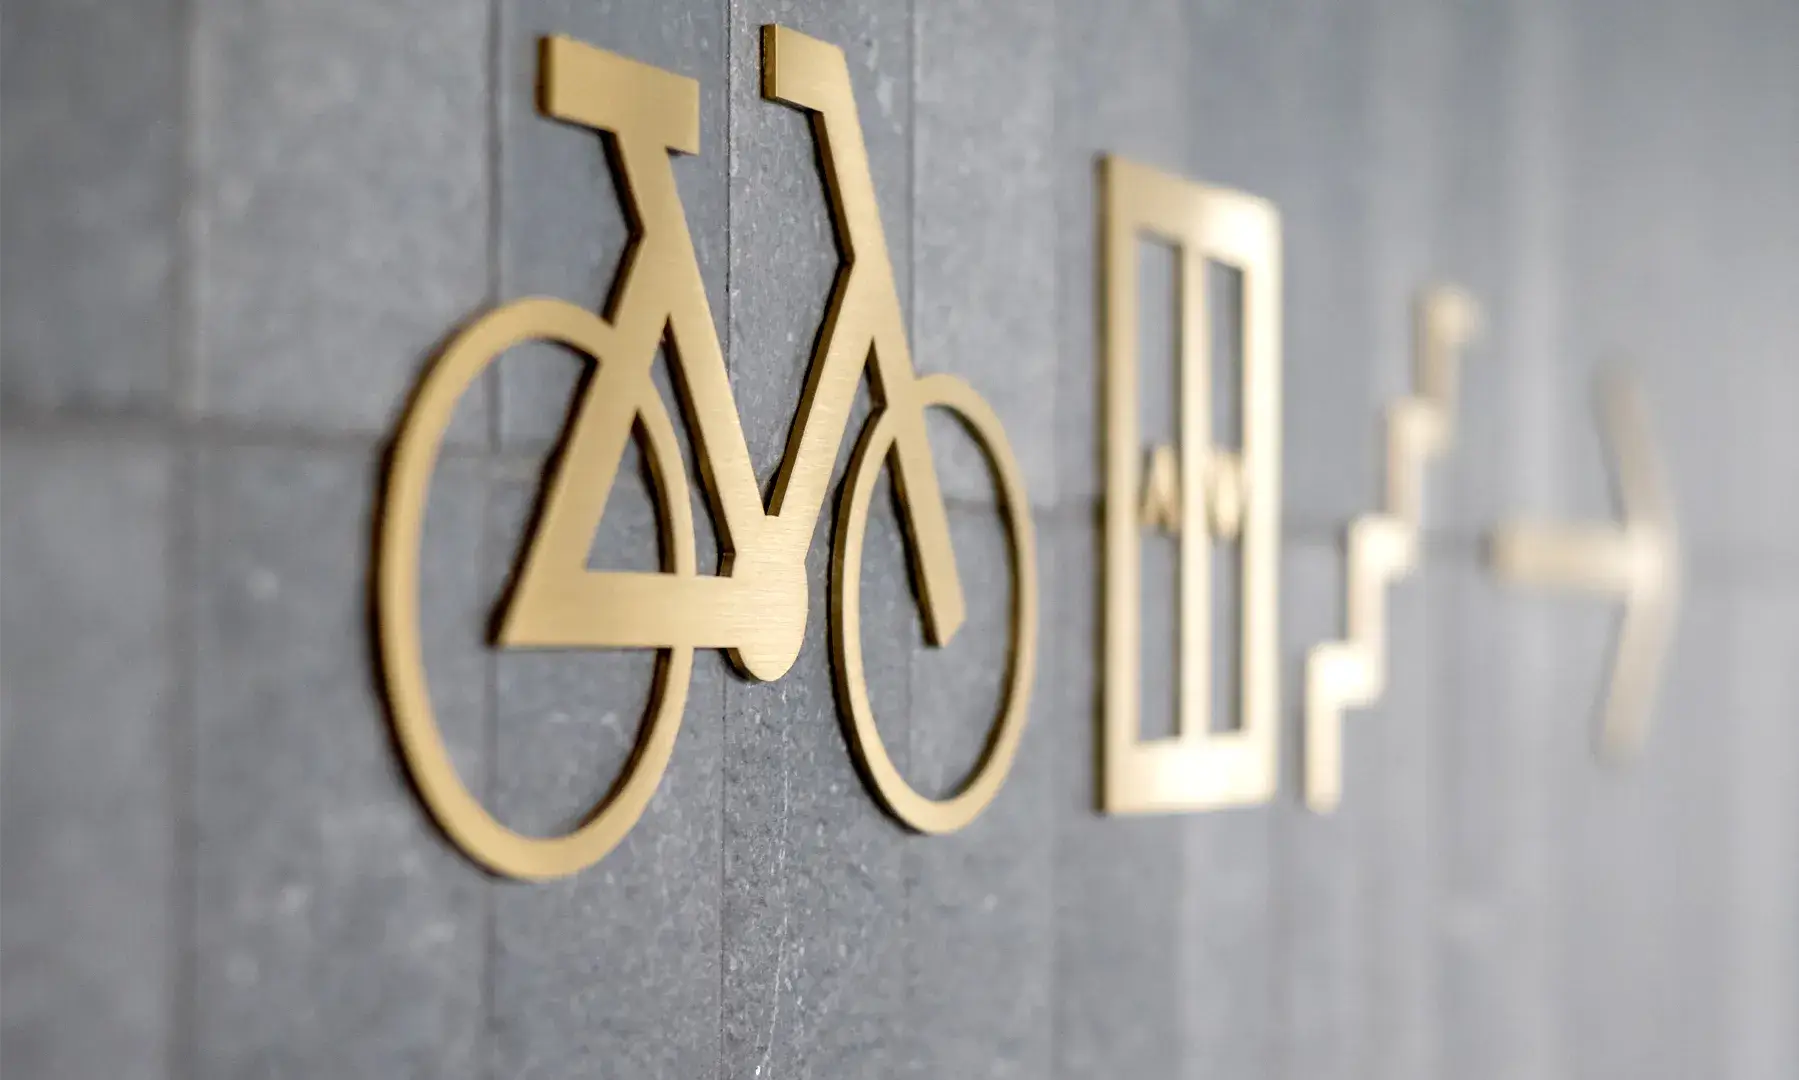 Piktogramm Fahrradschild aus Metall